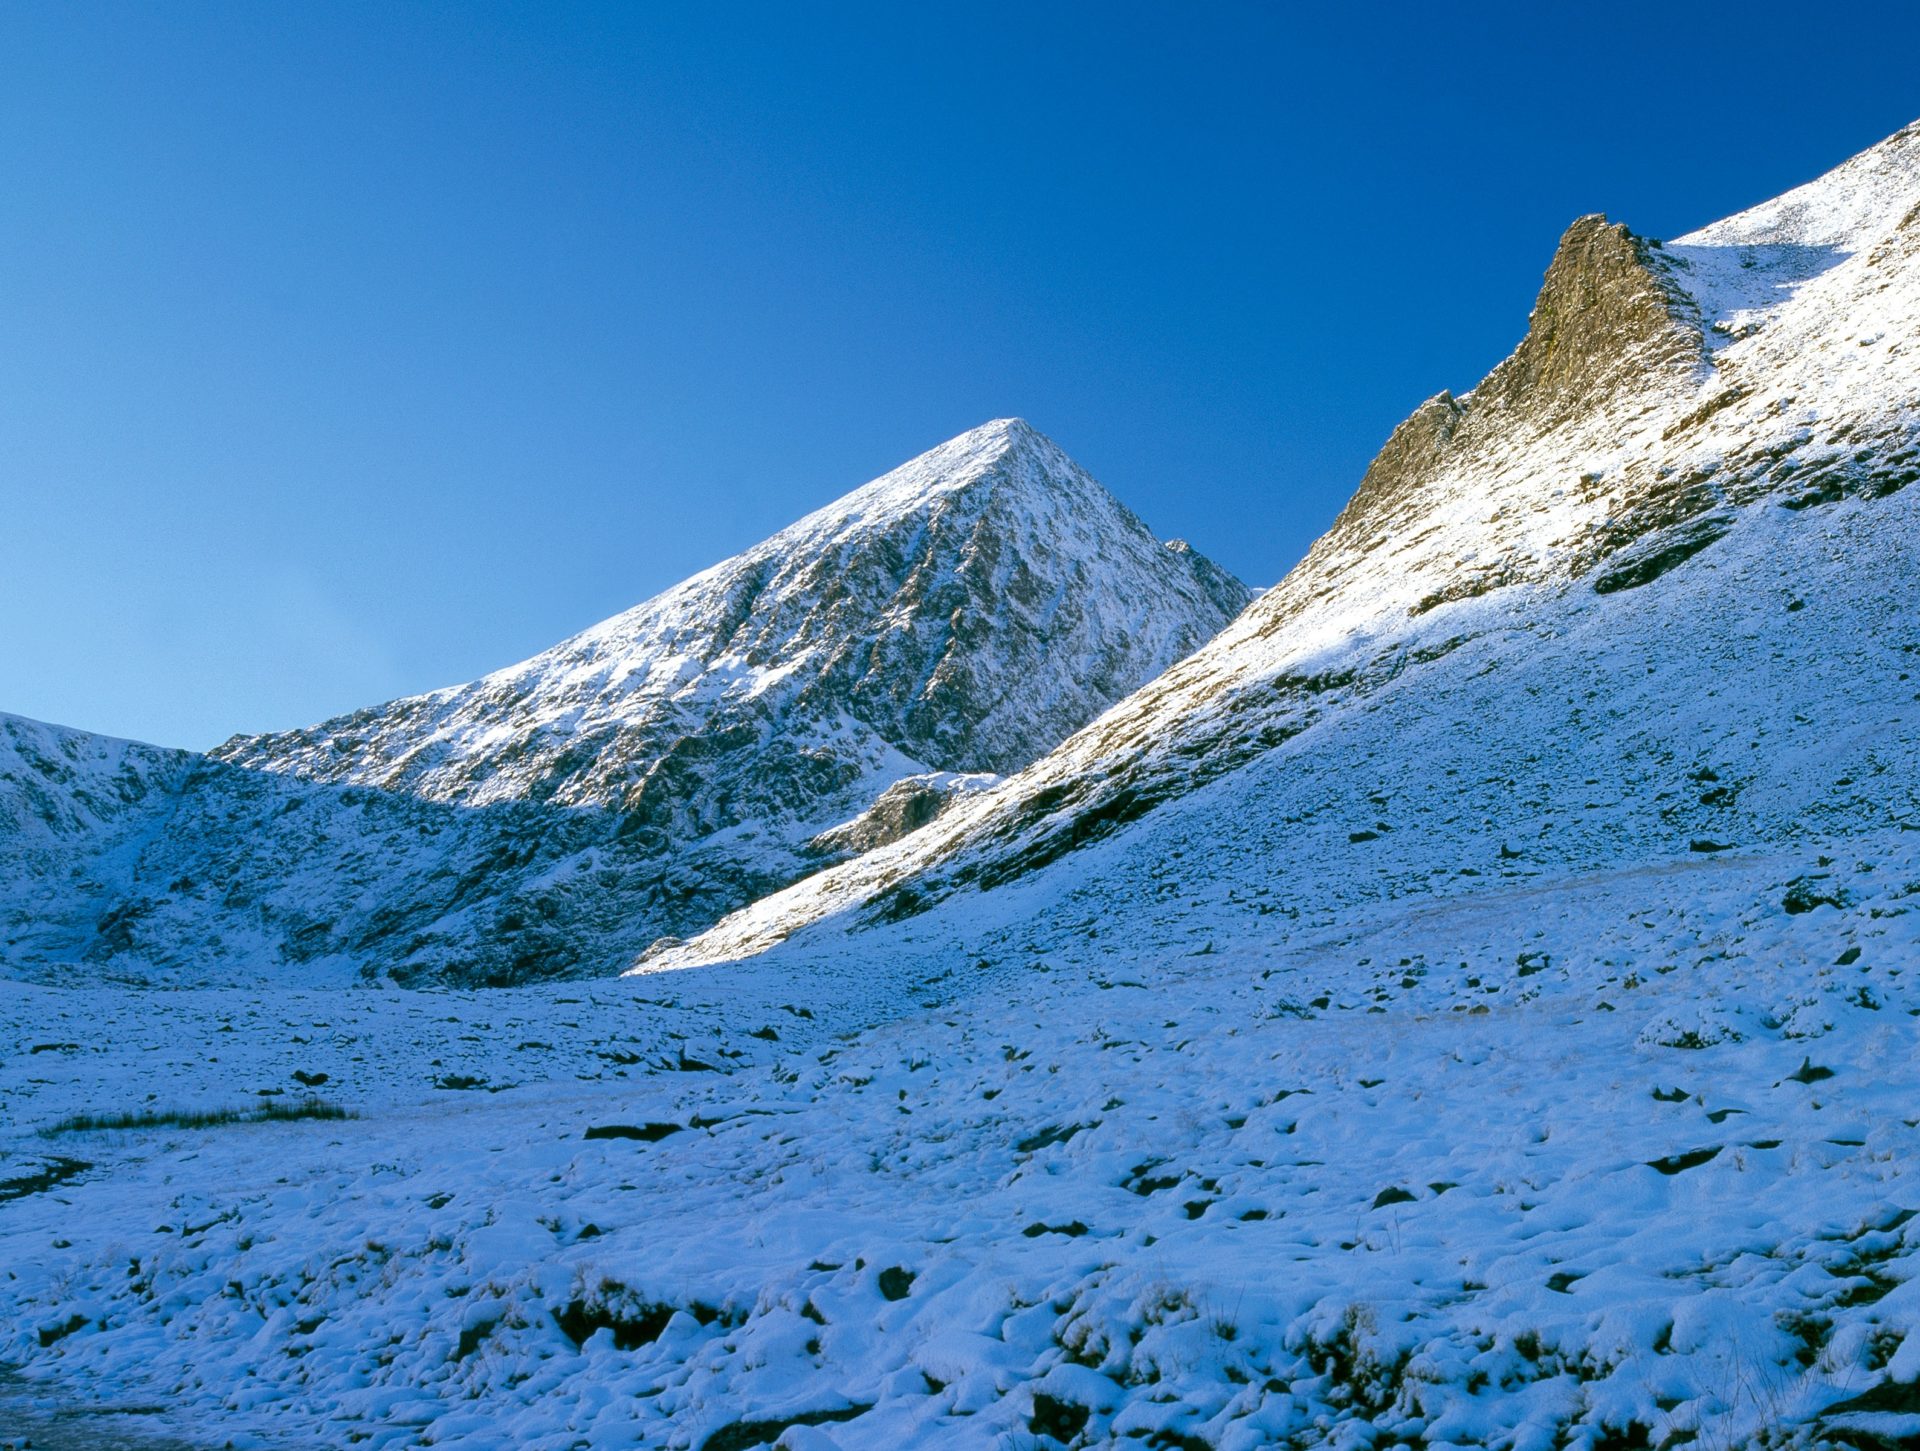 Ireland's highest mountain range, Carrauntoohil, covered in winter snow.